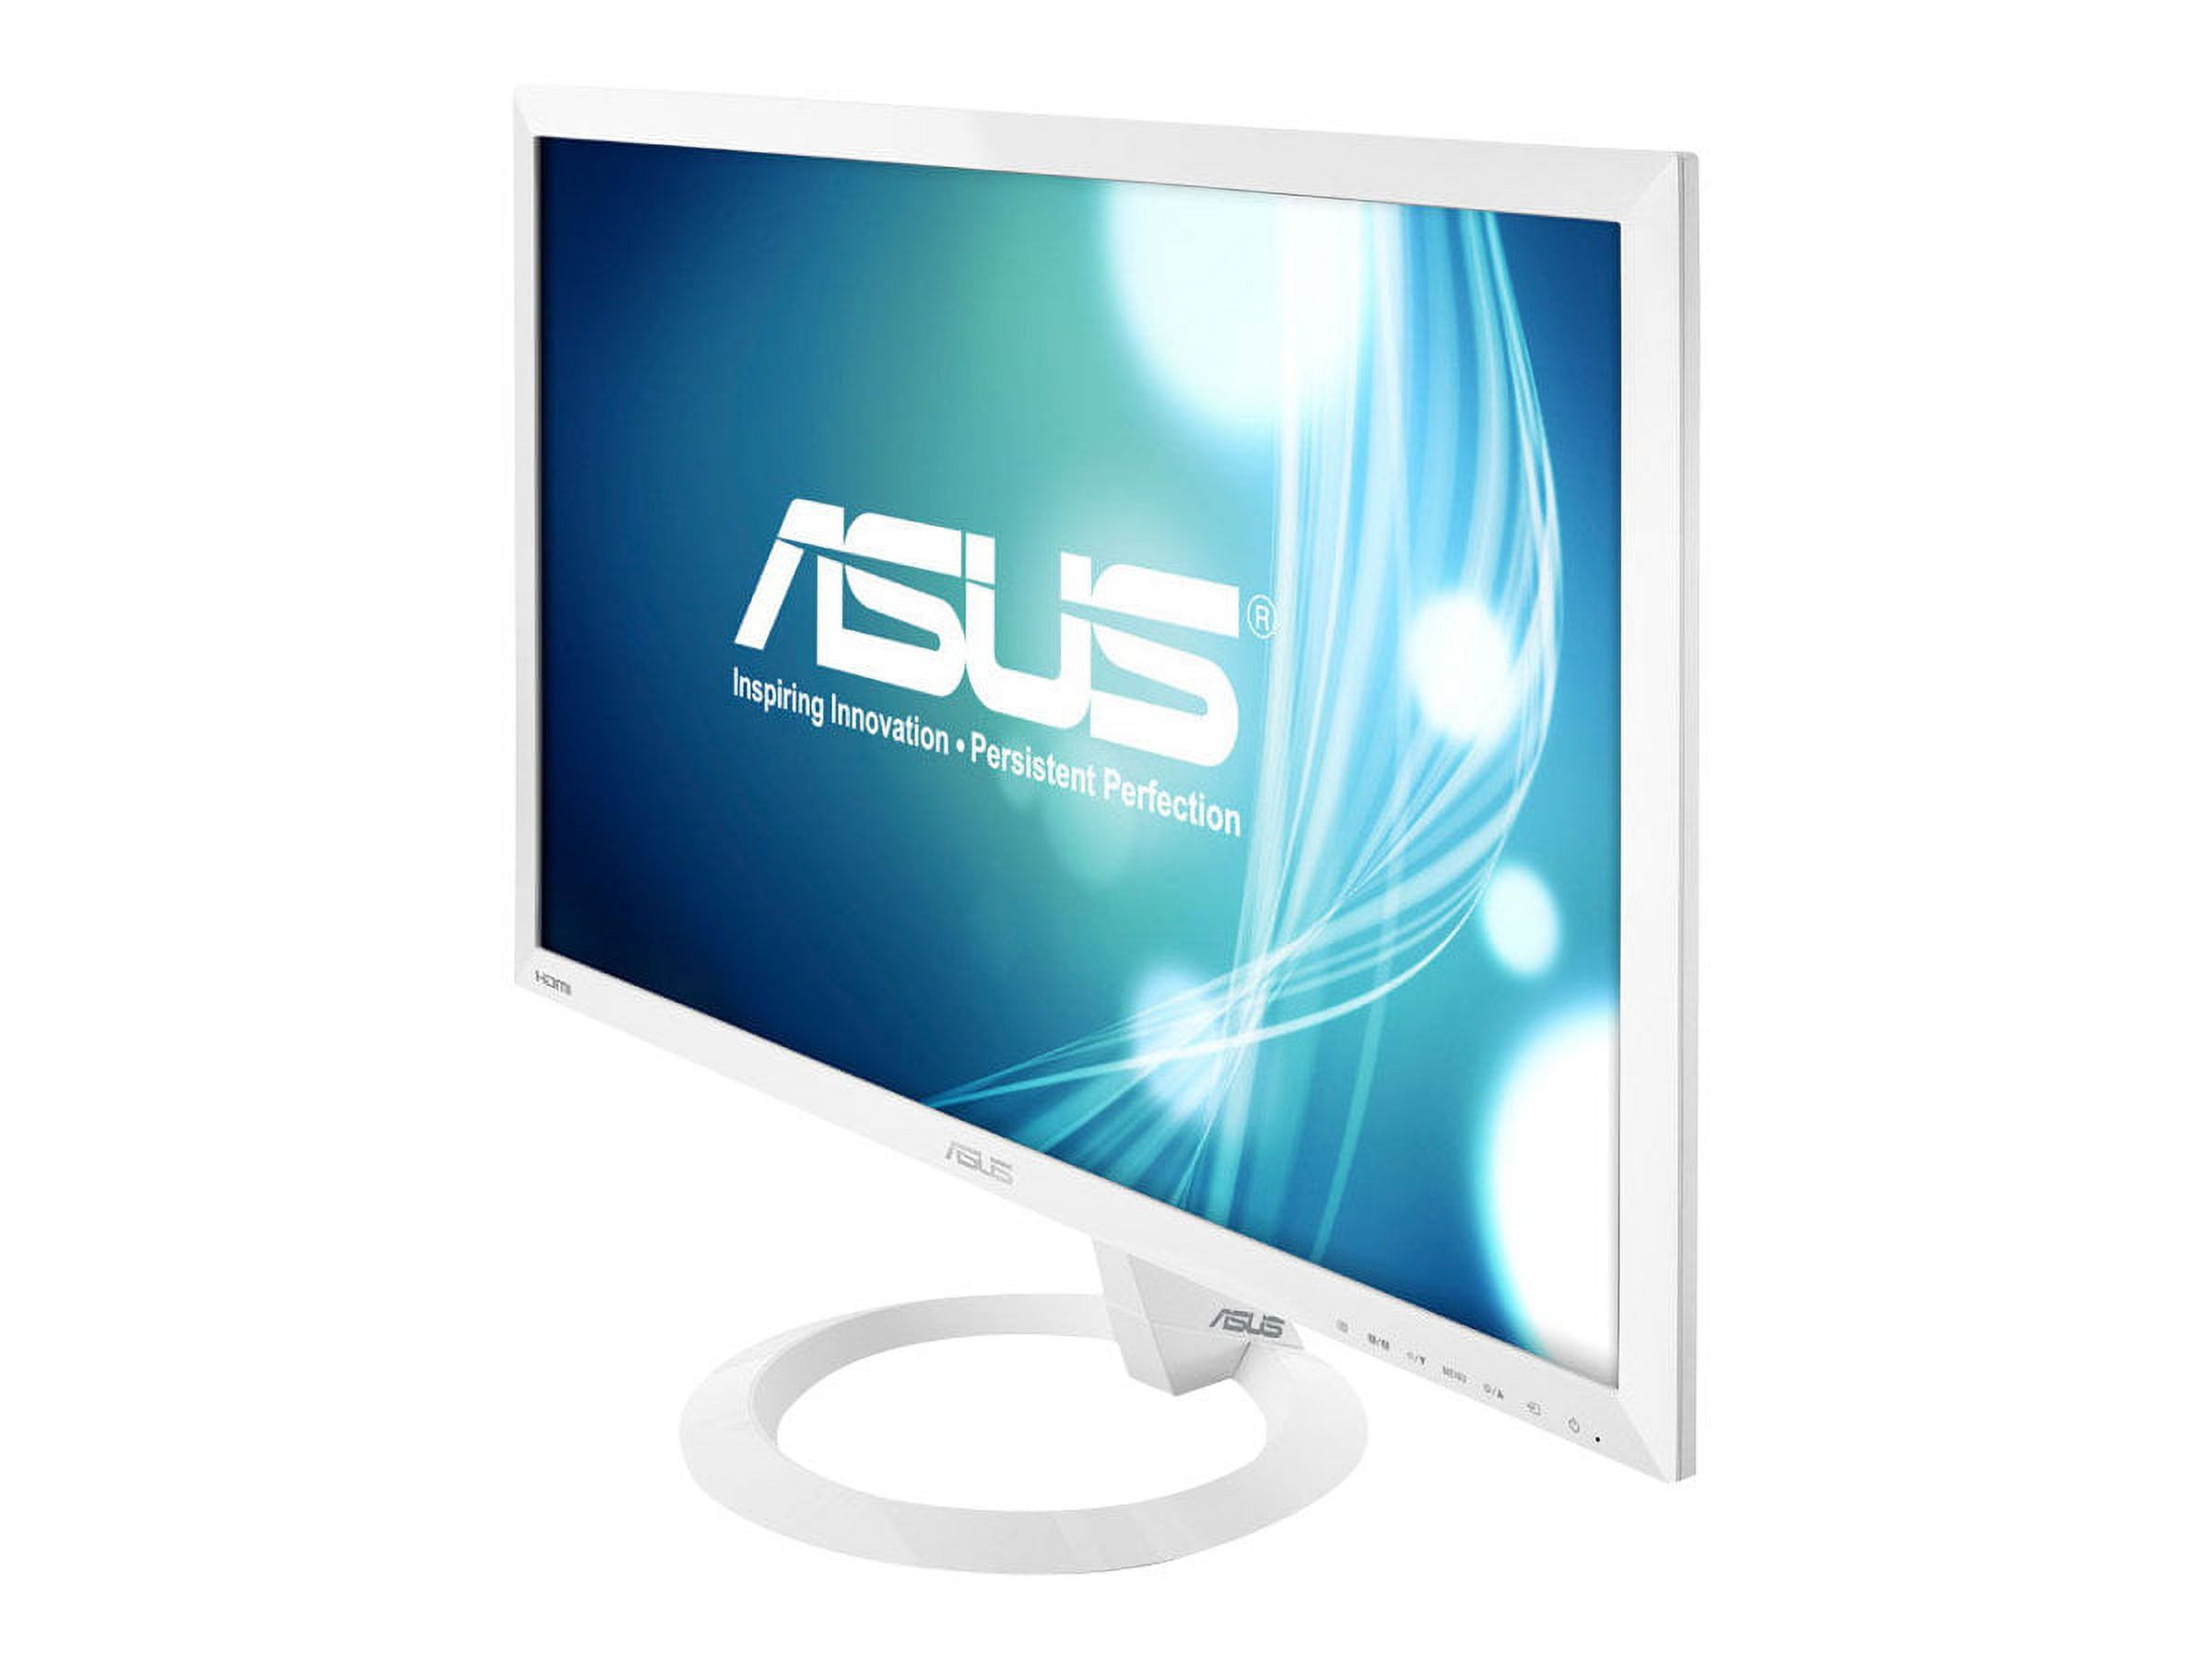 ASUS VX238H-W - LED monitor - 23" - 1920 x 1080 Full HD (1080p) - TN - 250 cd/m������ - 1000:1 - 1 ms - 2xHDMI, VGA - speakers - white - image 1 of 6